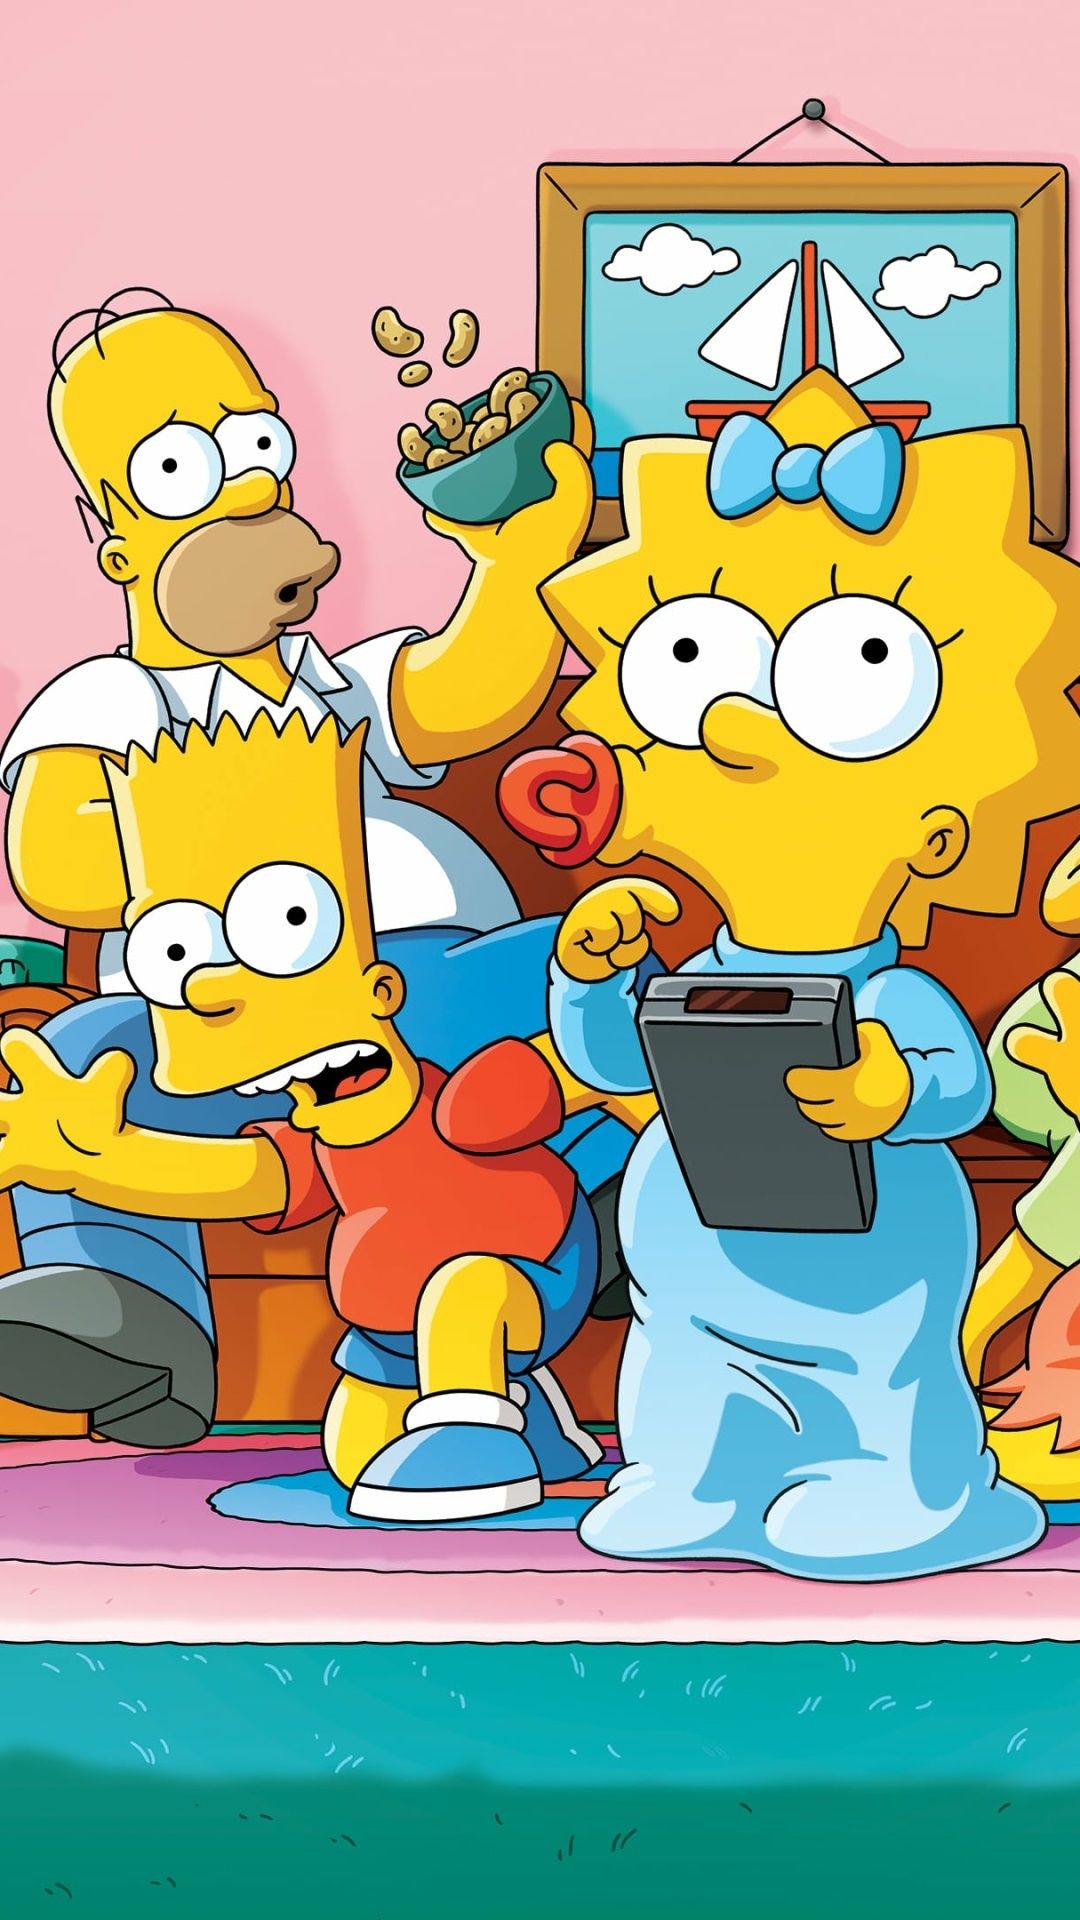 The Simpsons phone wallpaper 1080P, 2k, 4k Full HD Wallpaper, Background Free Download